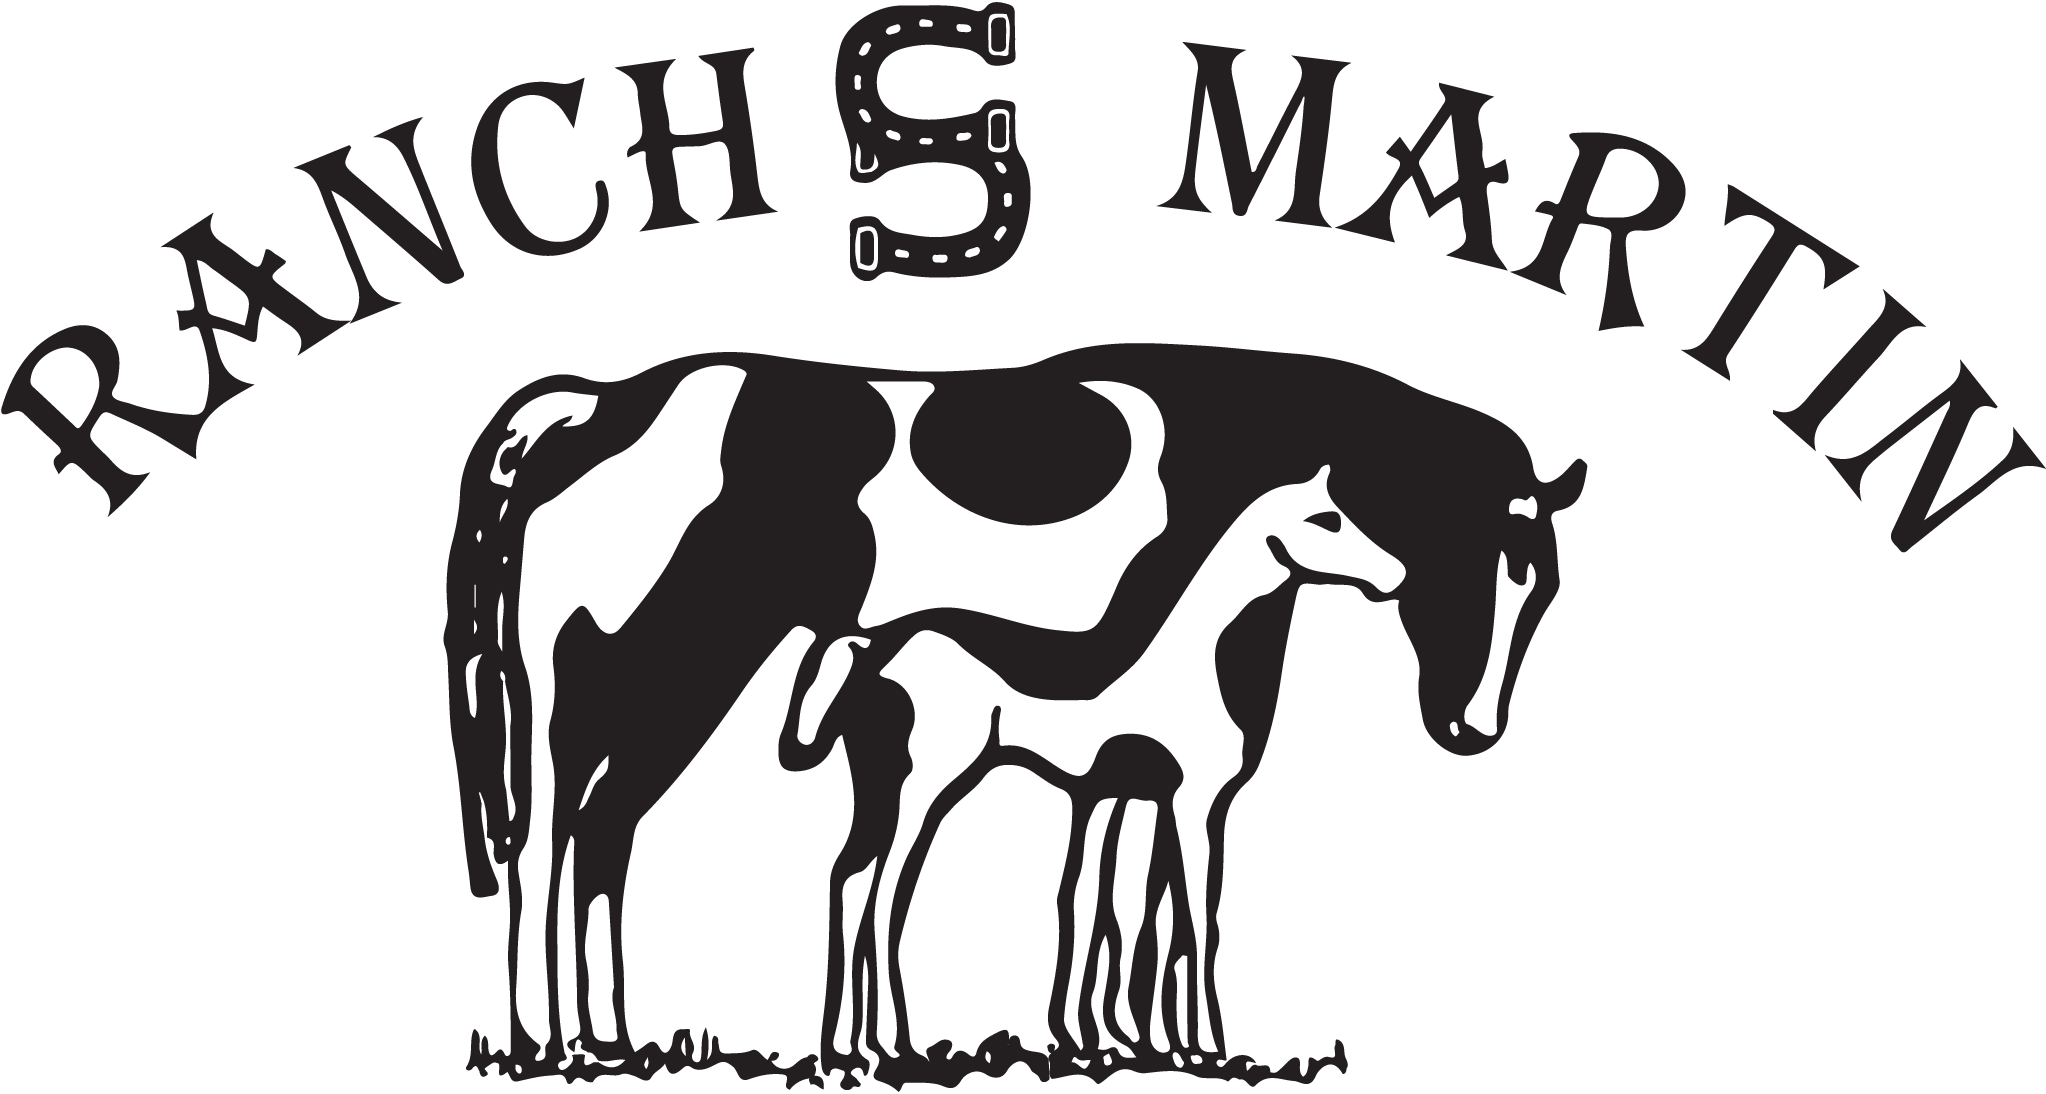 Ranch S. Martin